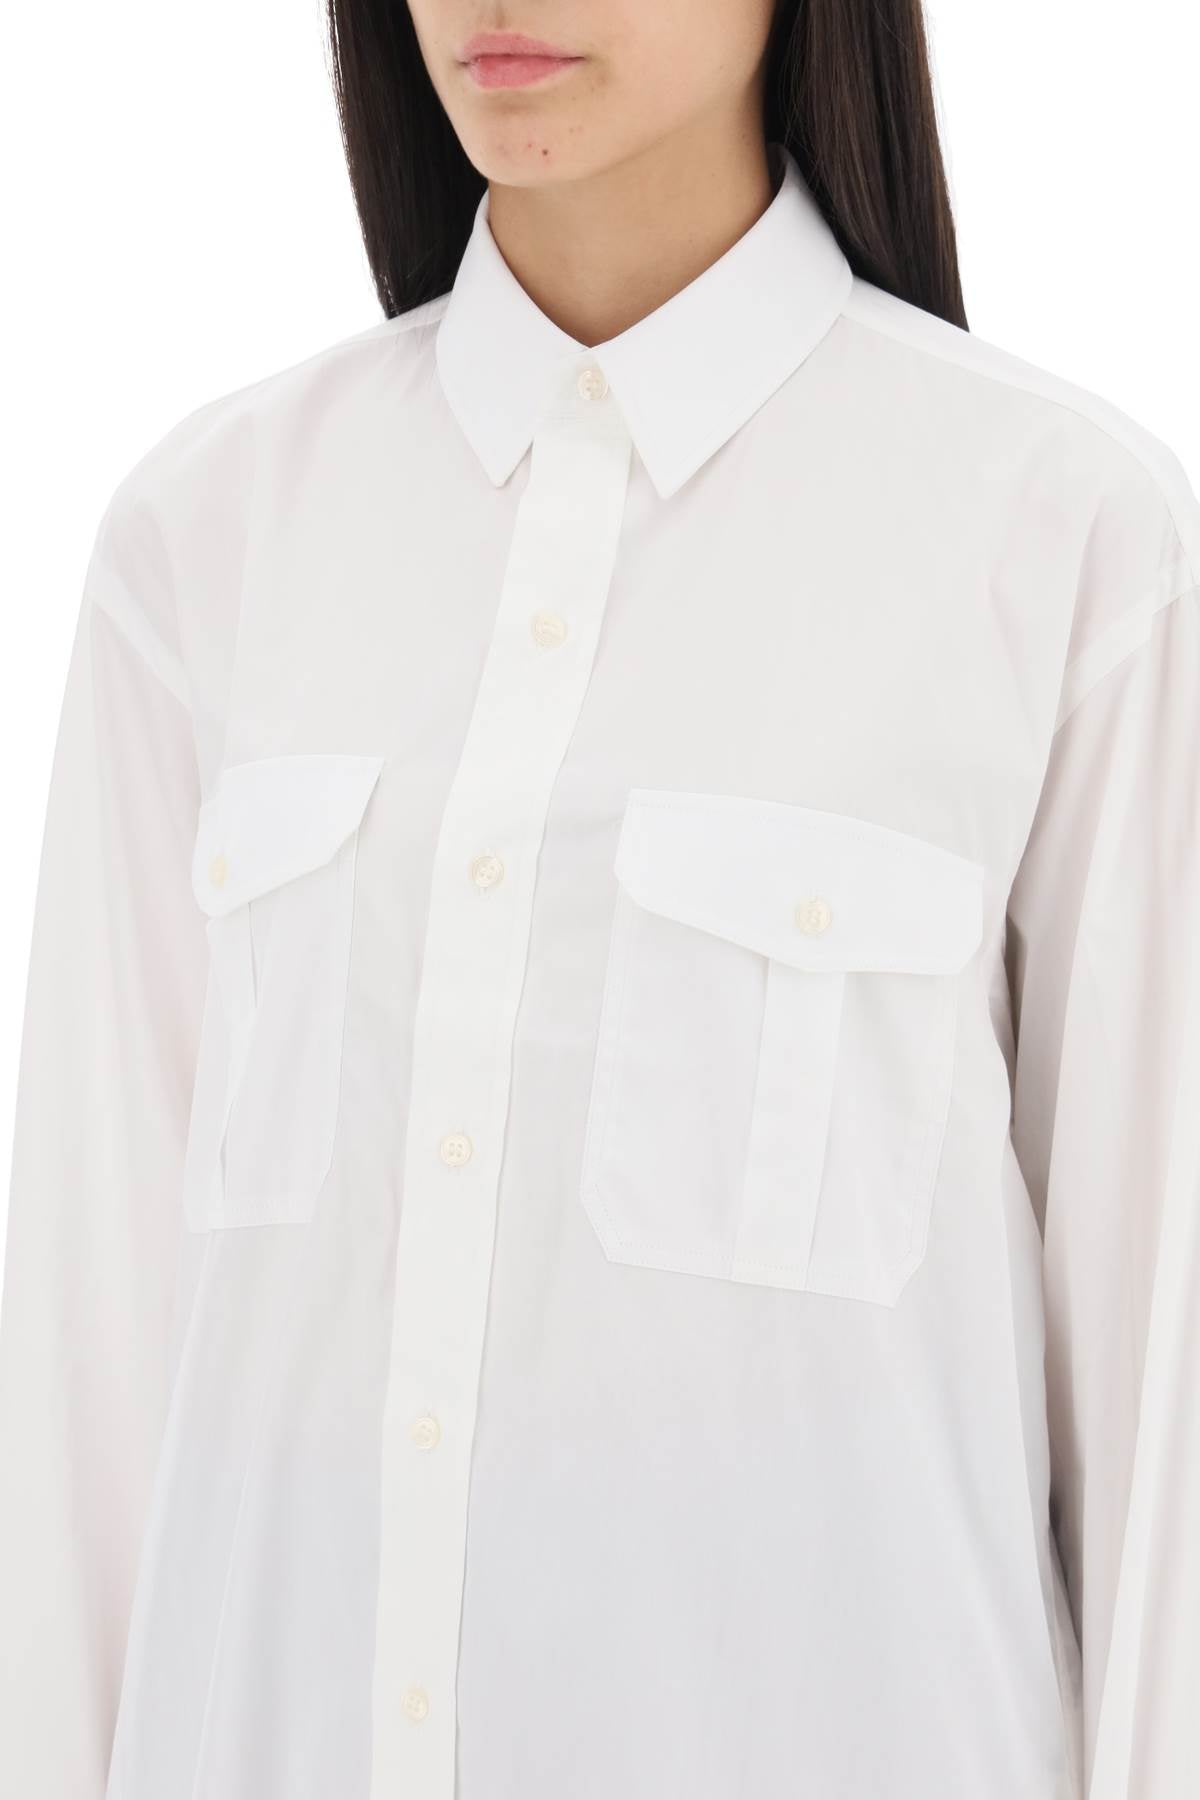 Wardrobe.nyc maxi shirt in cotton batista-3